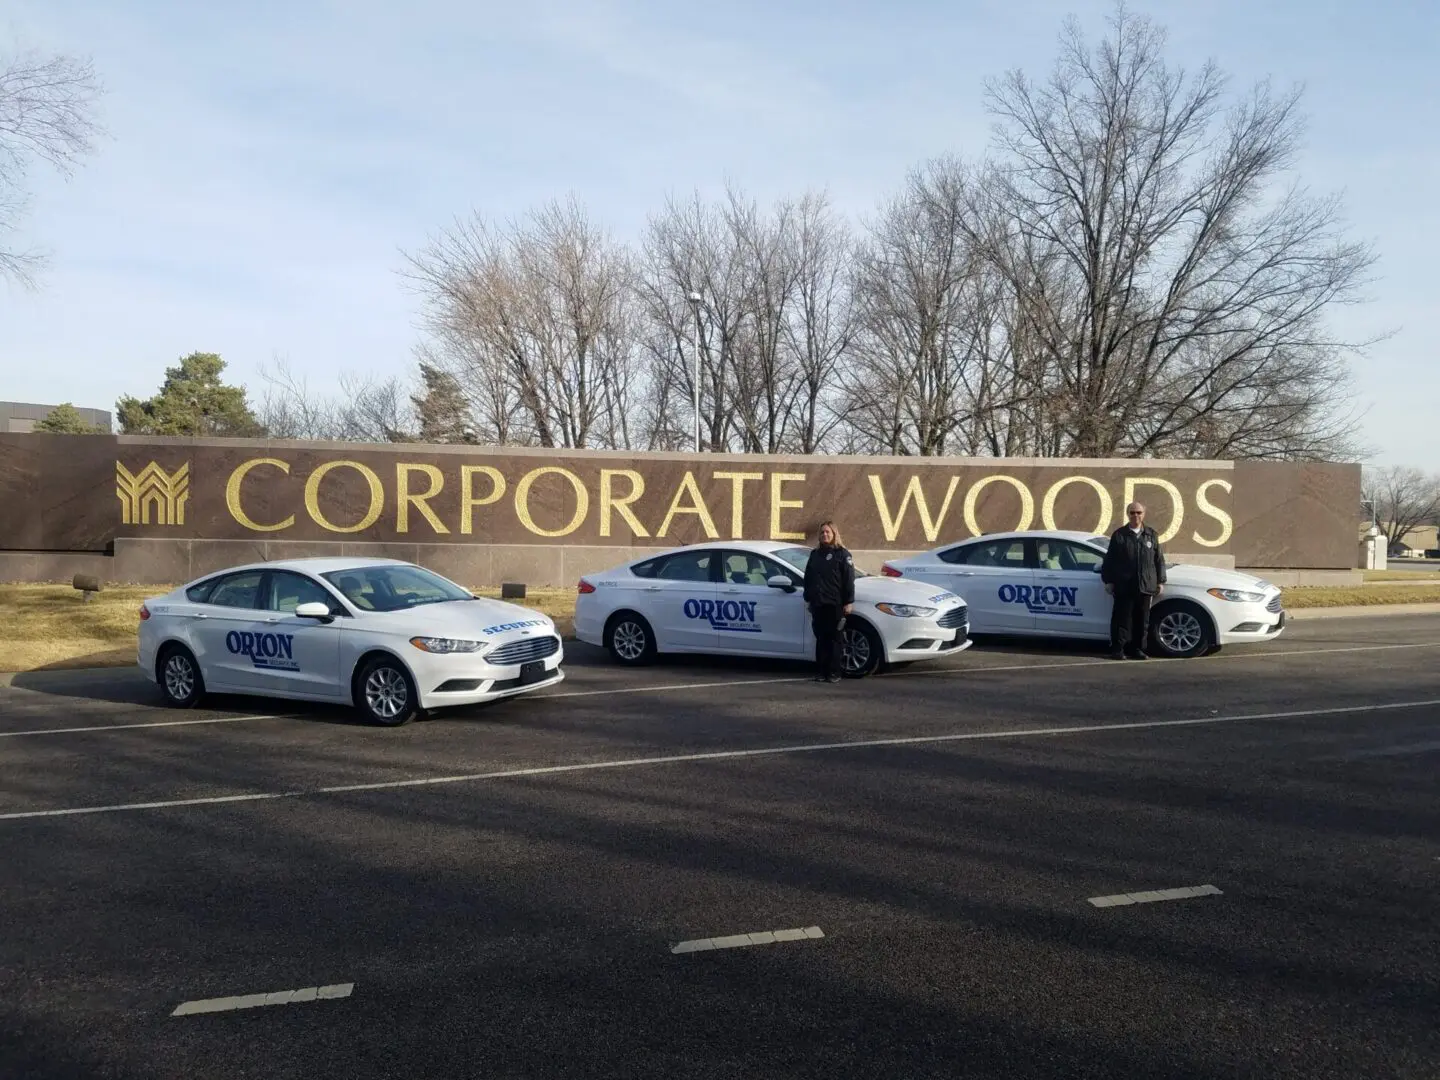 Corporate Woods Mobiole Patrol Fleet